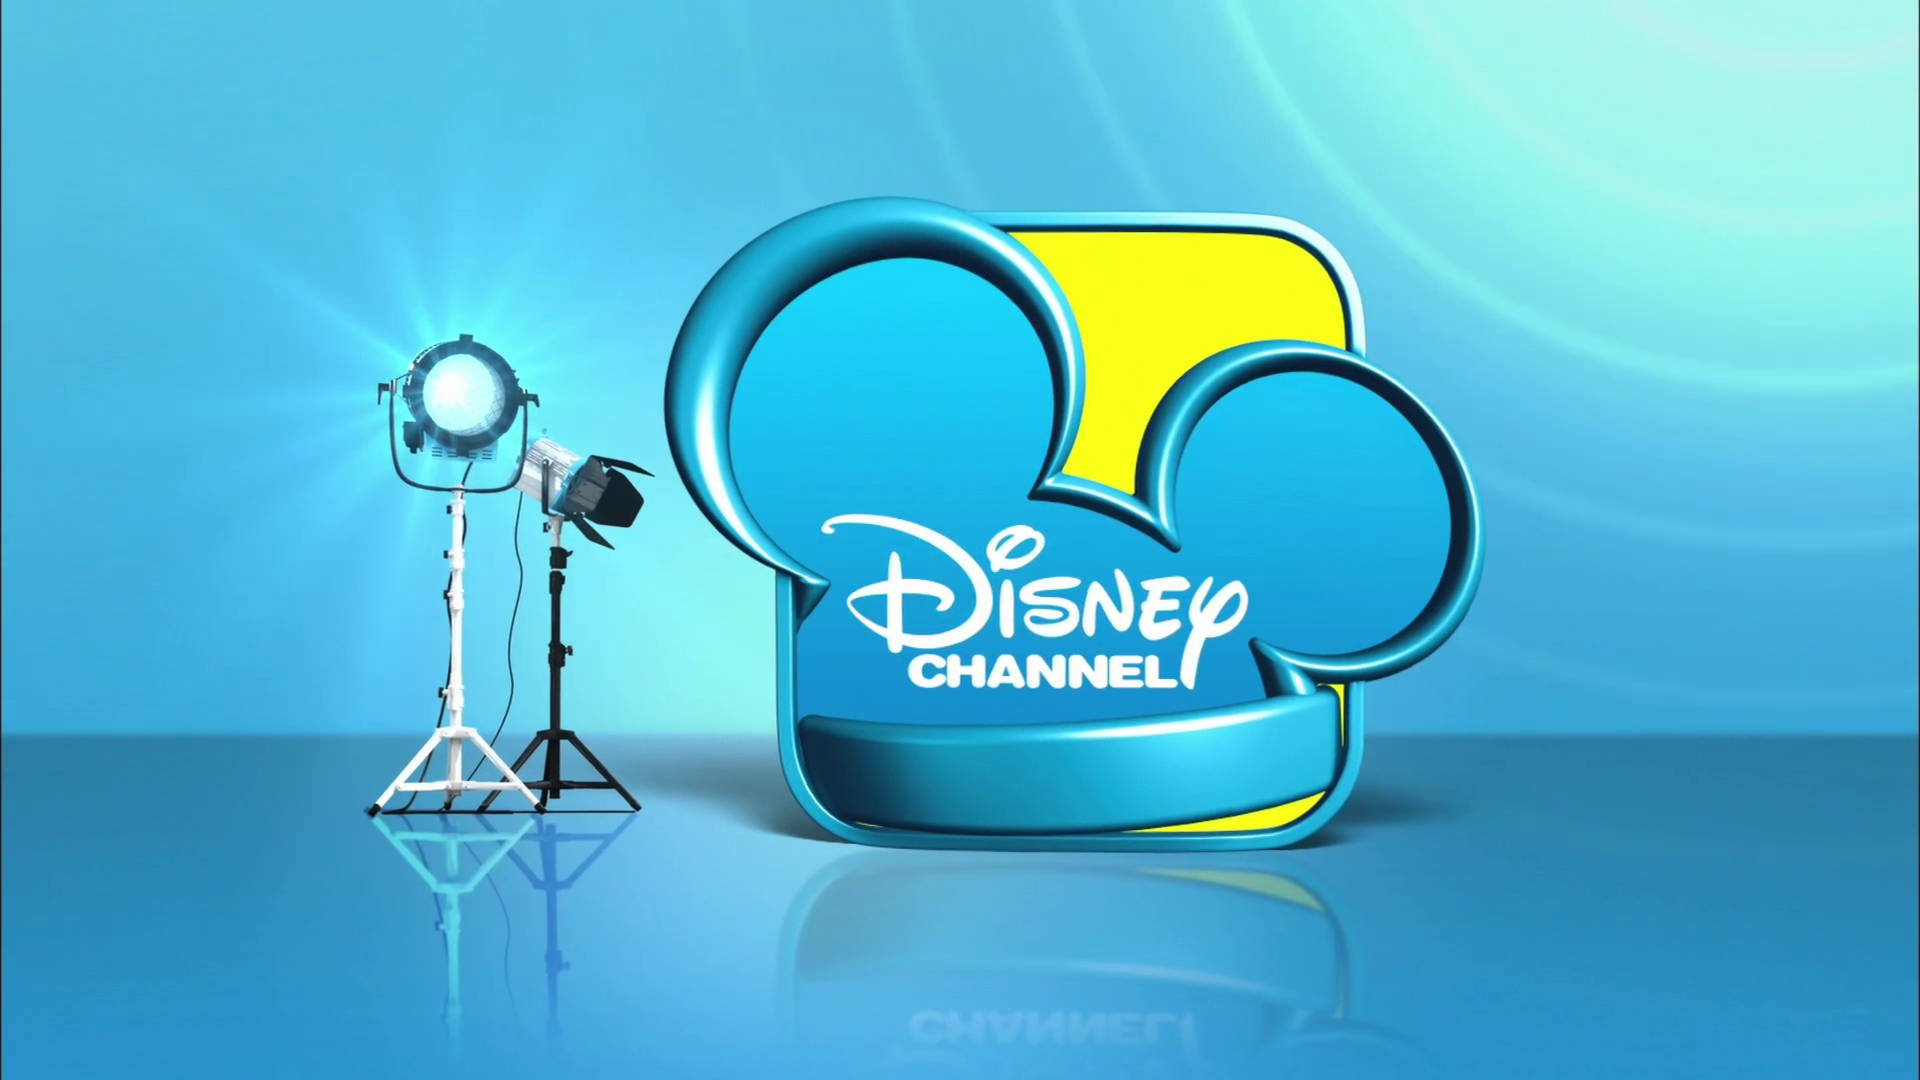 Disney Channel Digitally Designed Logo Background